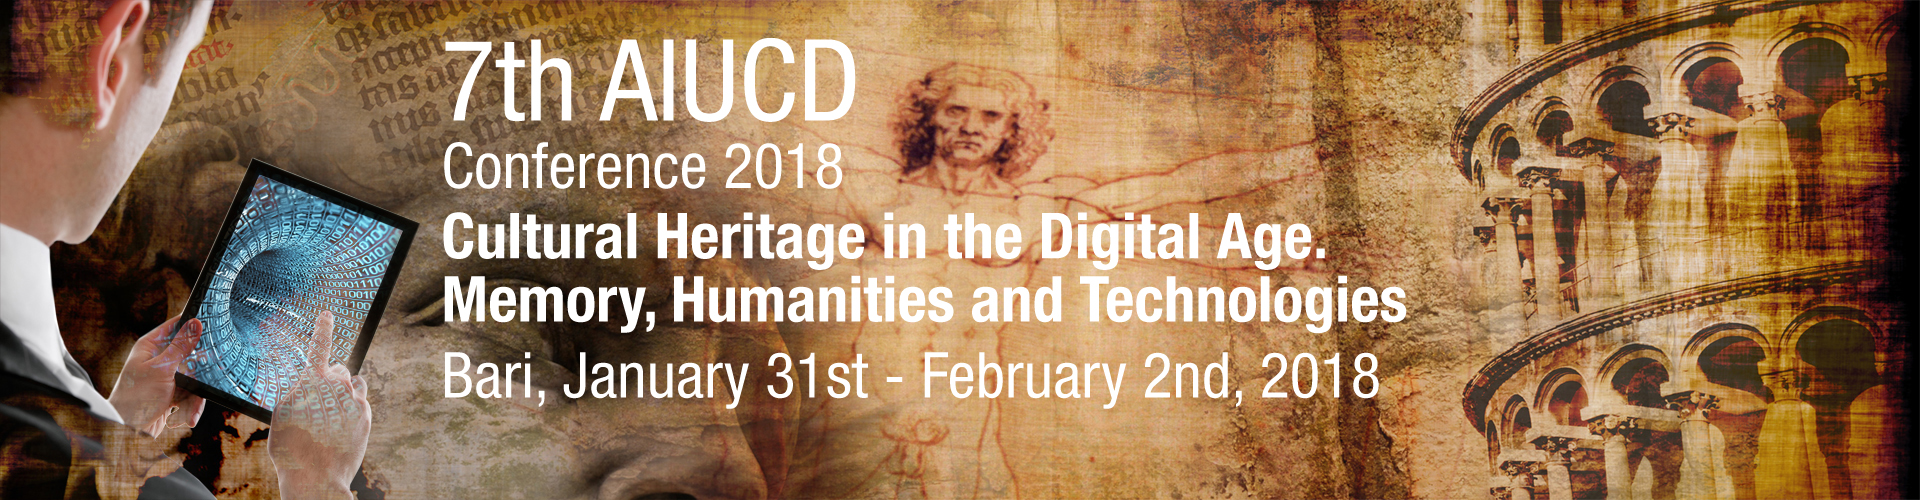 Conferenza AIUCD 2018: Bari, 31 gennaio – 2 febbraio 2018